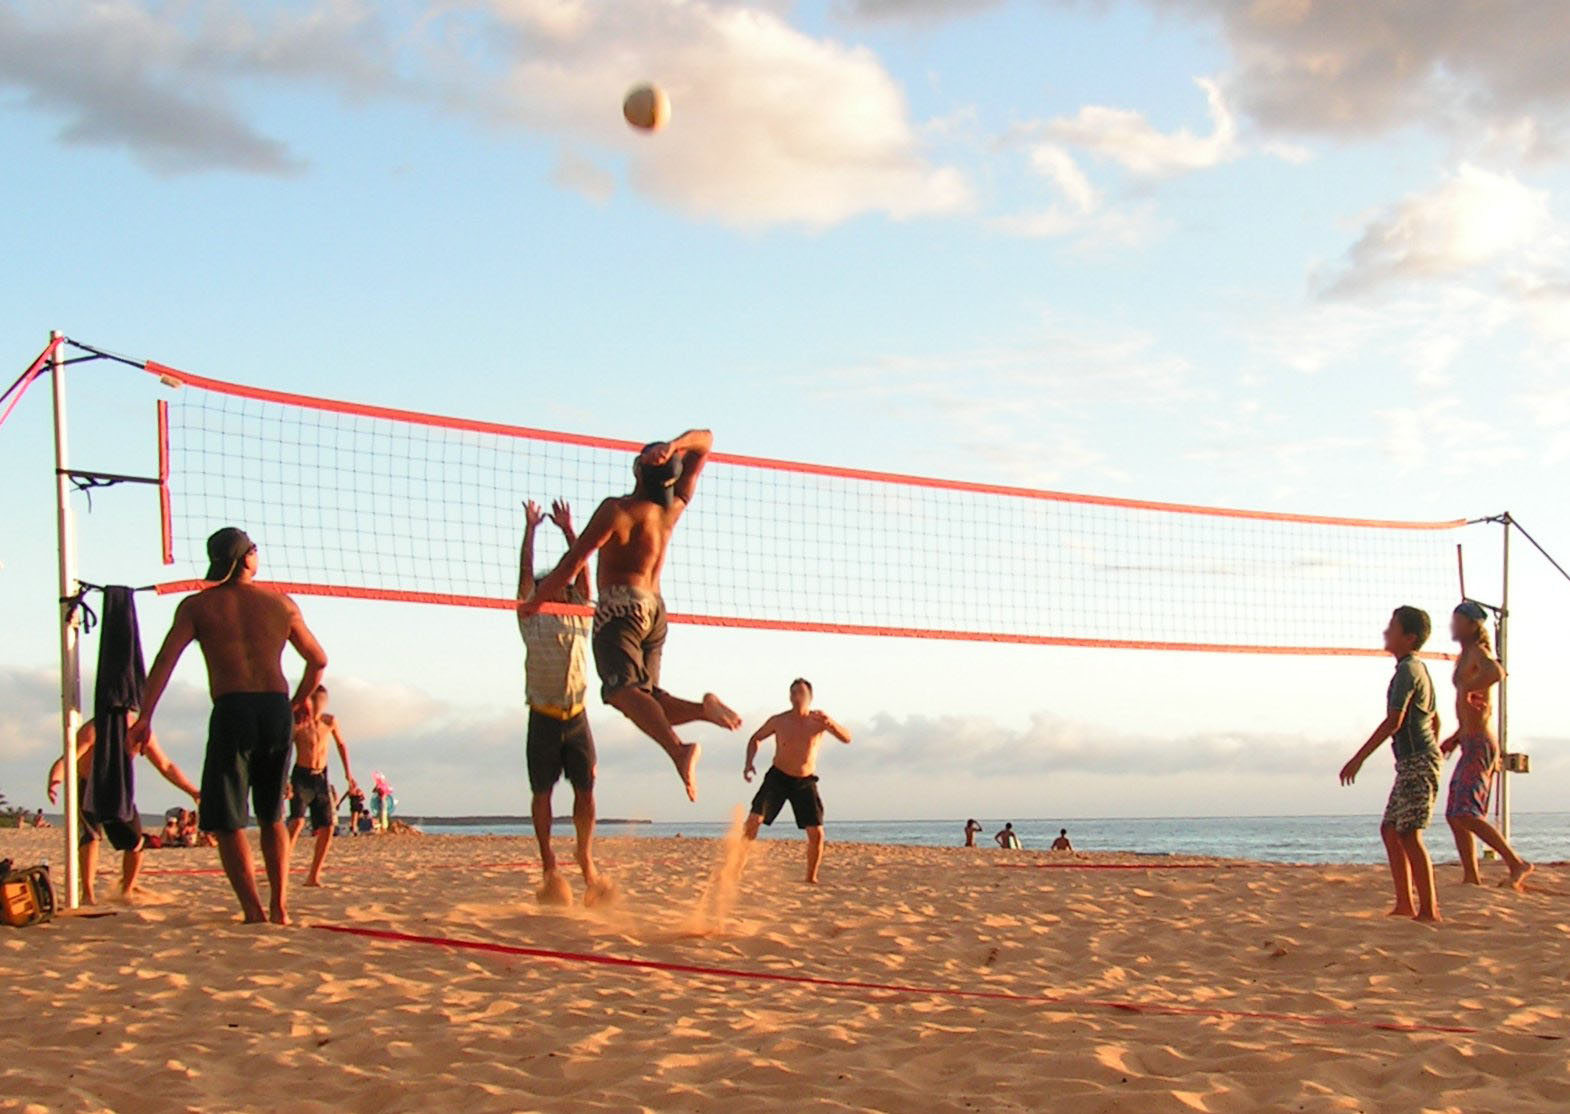 Best Volleyball Pics Hd Wallpaper - Volleyball In The Beach - HD Wallpaper 